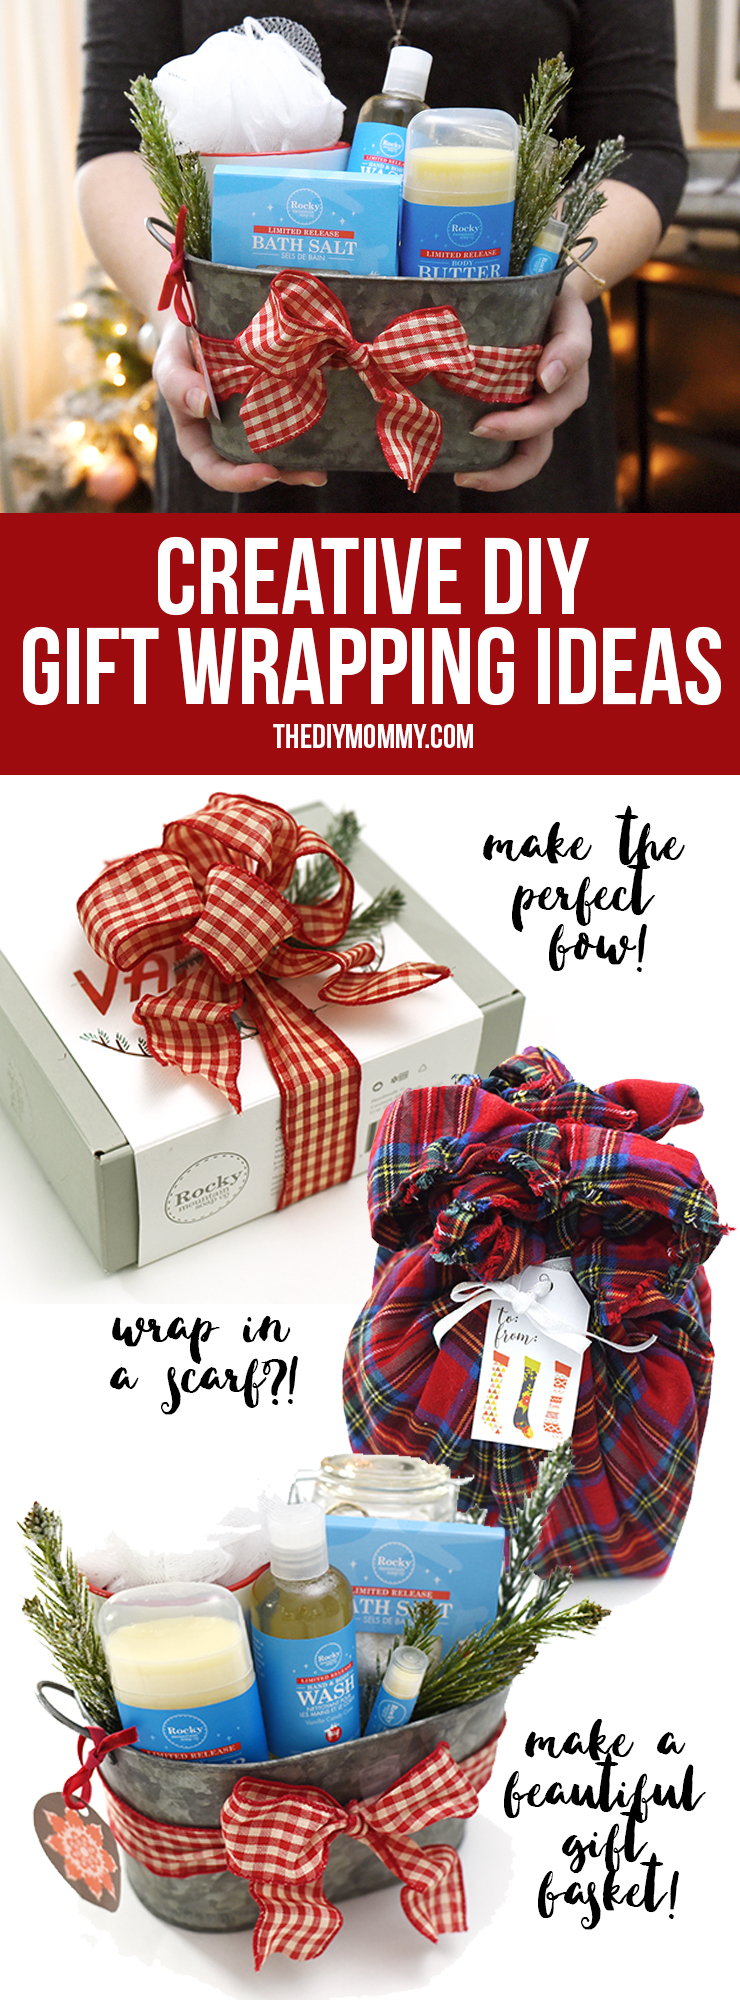 Creative DIY Gift Wrapping Ideas
